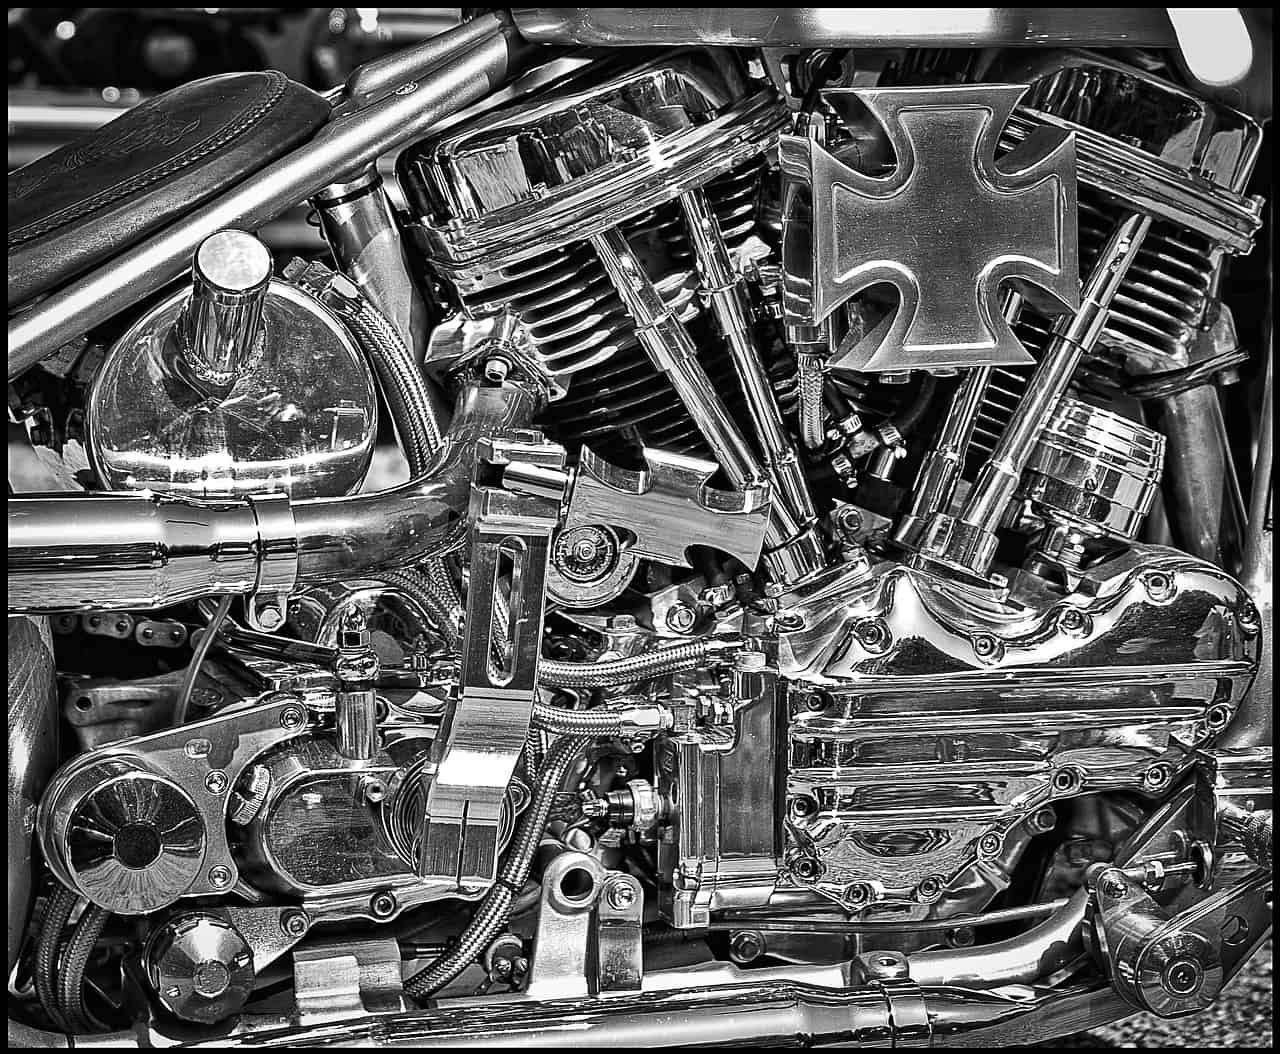 Harley Davidson Crate Motor Featured Image